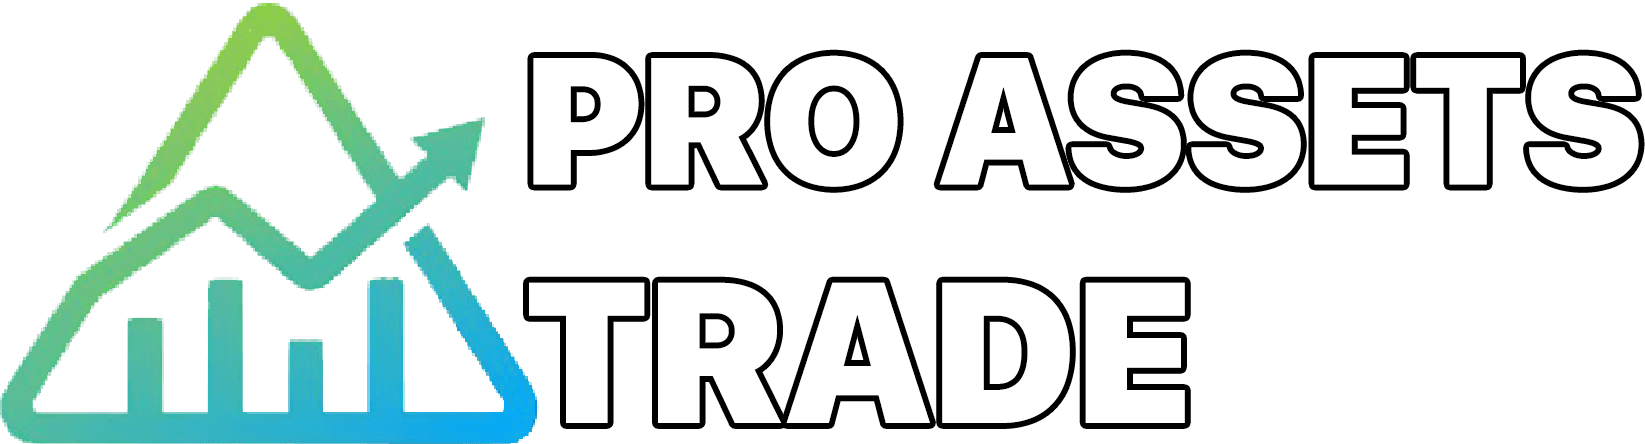 Pro Assets Trade